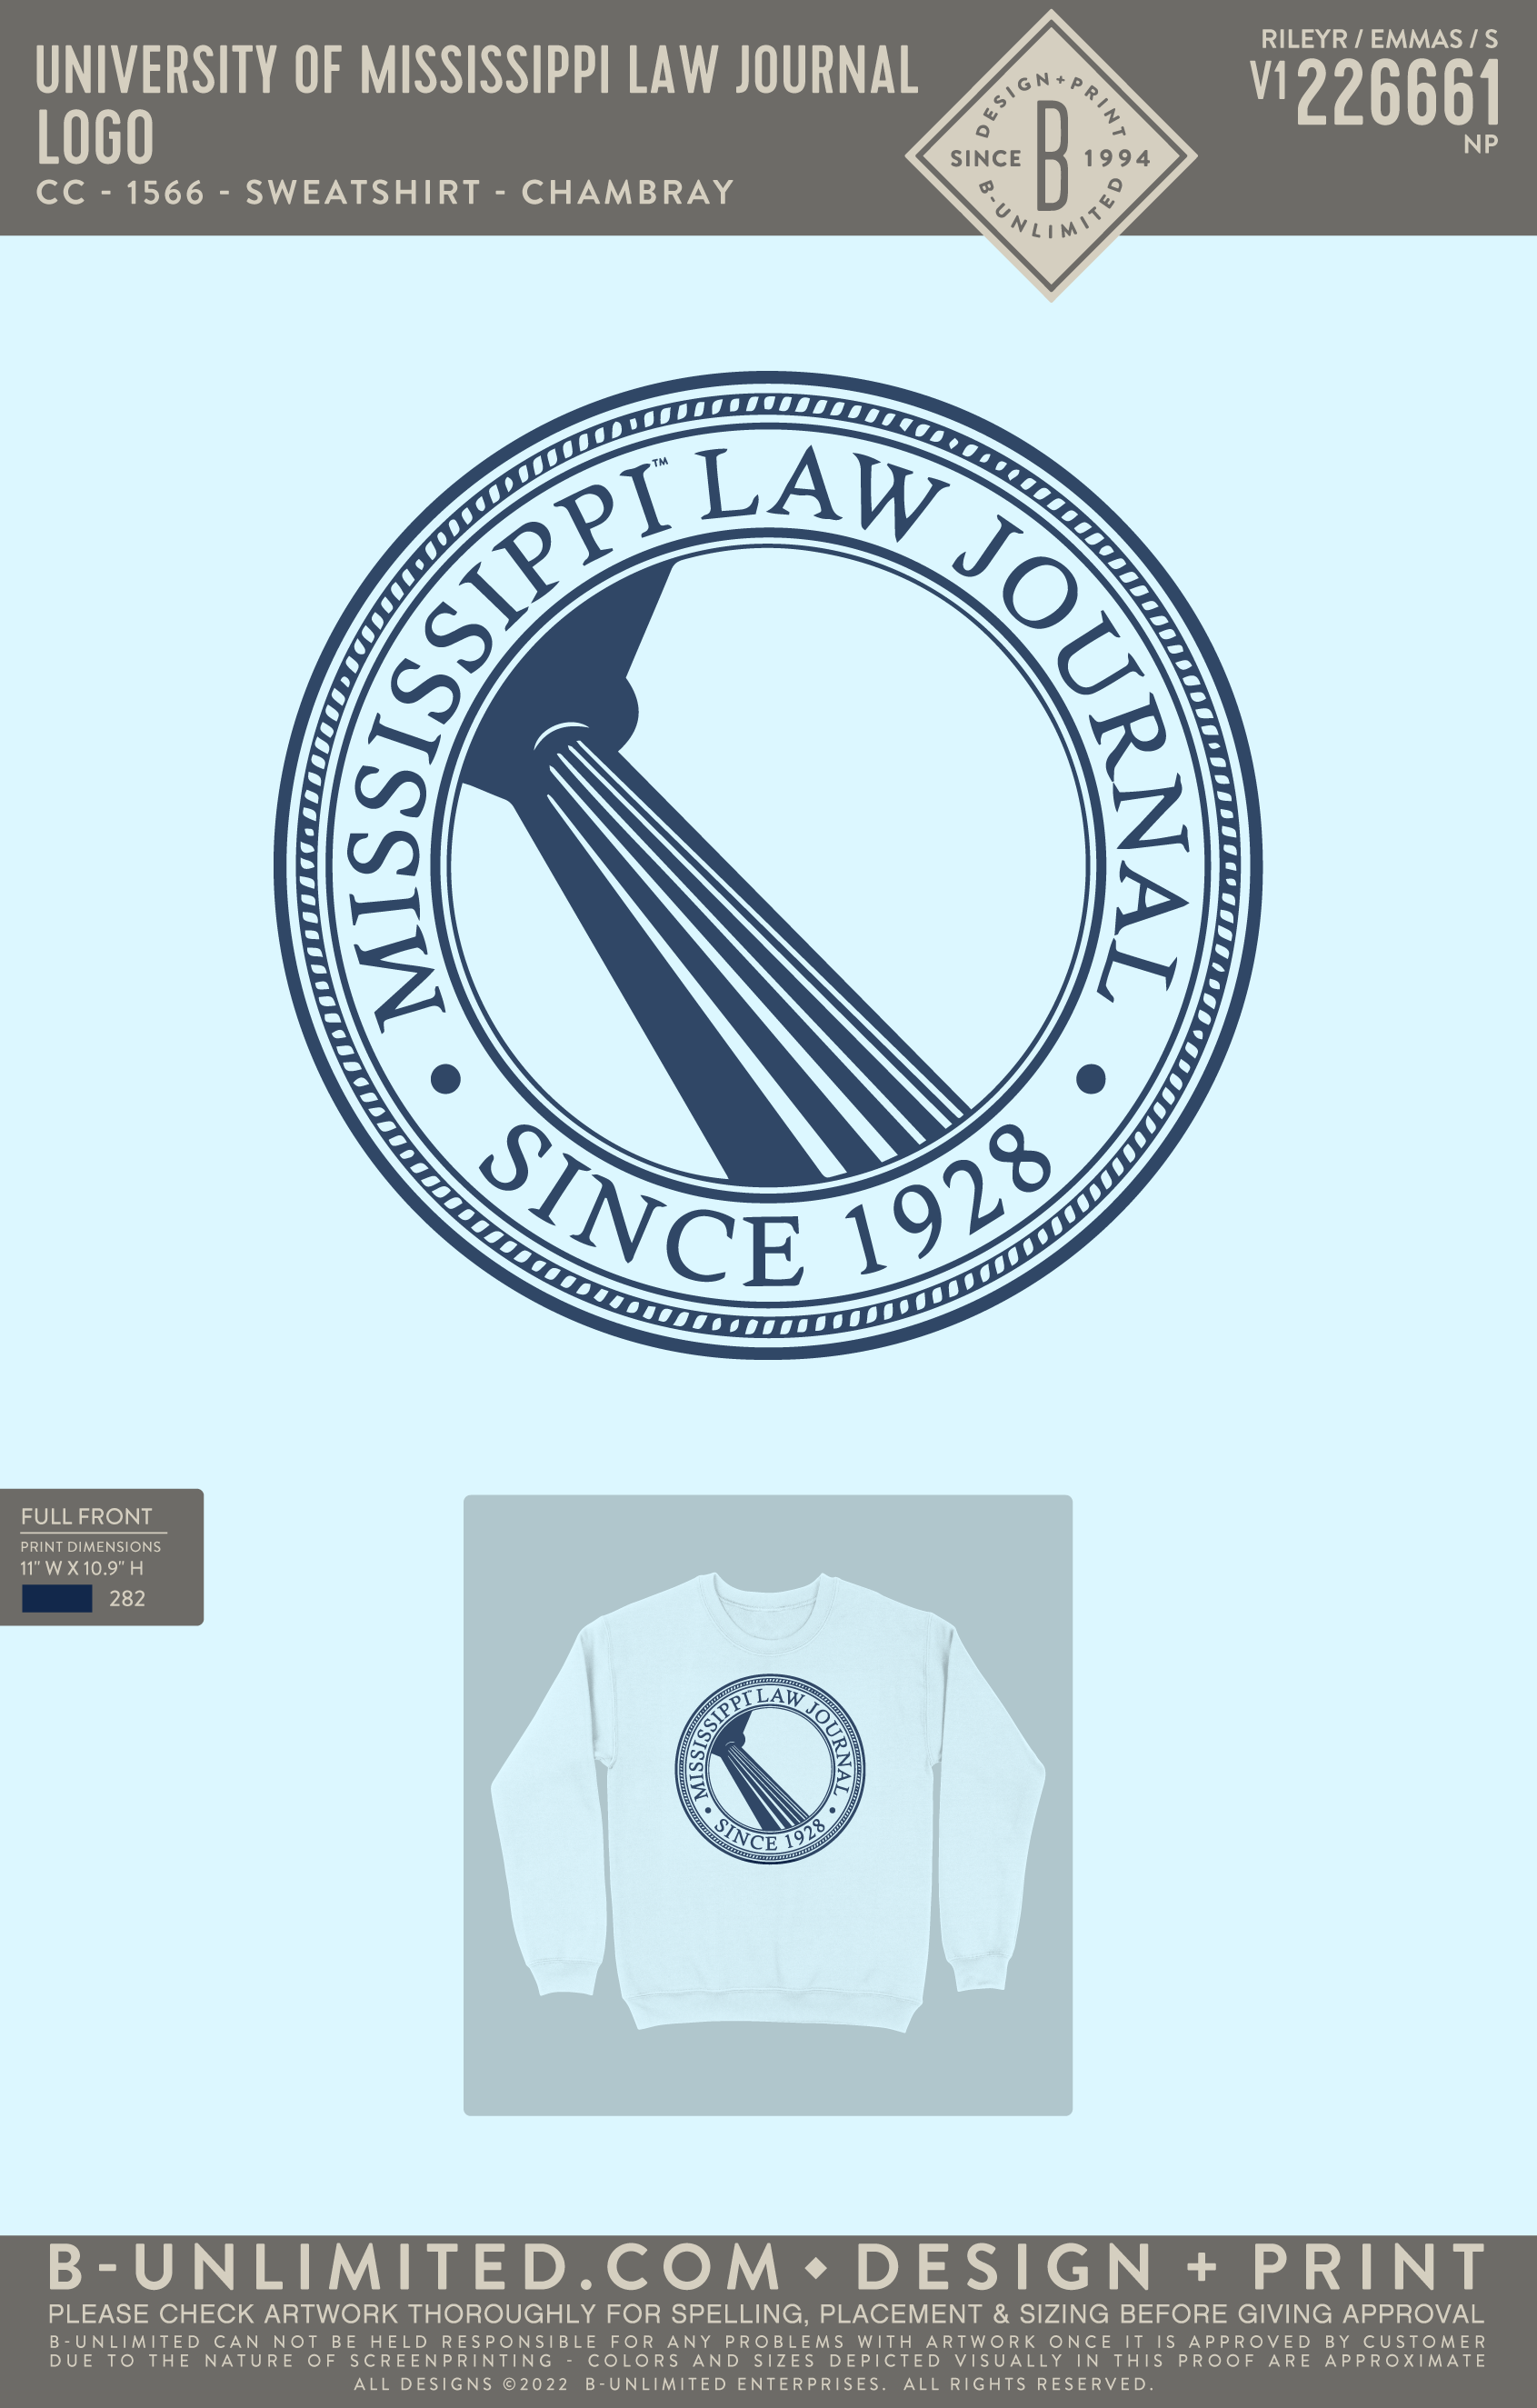 University of Mississippi Law Journal - Logo - CC - 1566 - Sweatshirt - Chambray